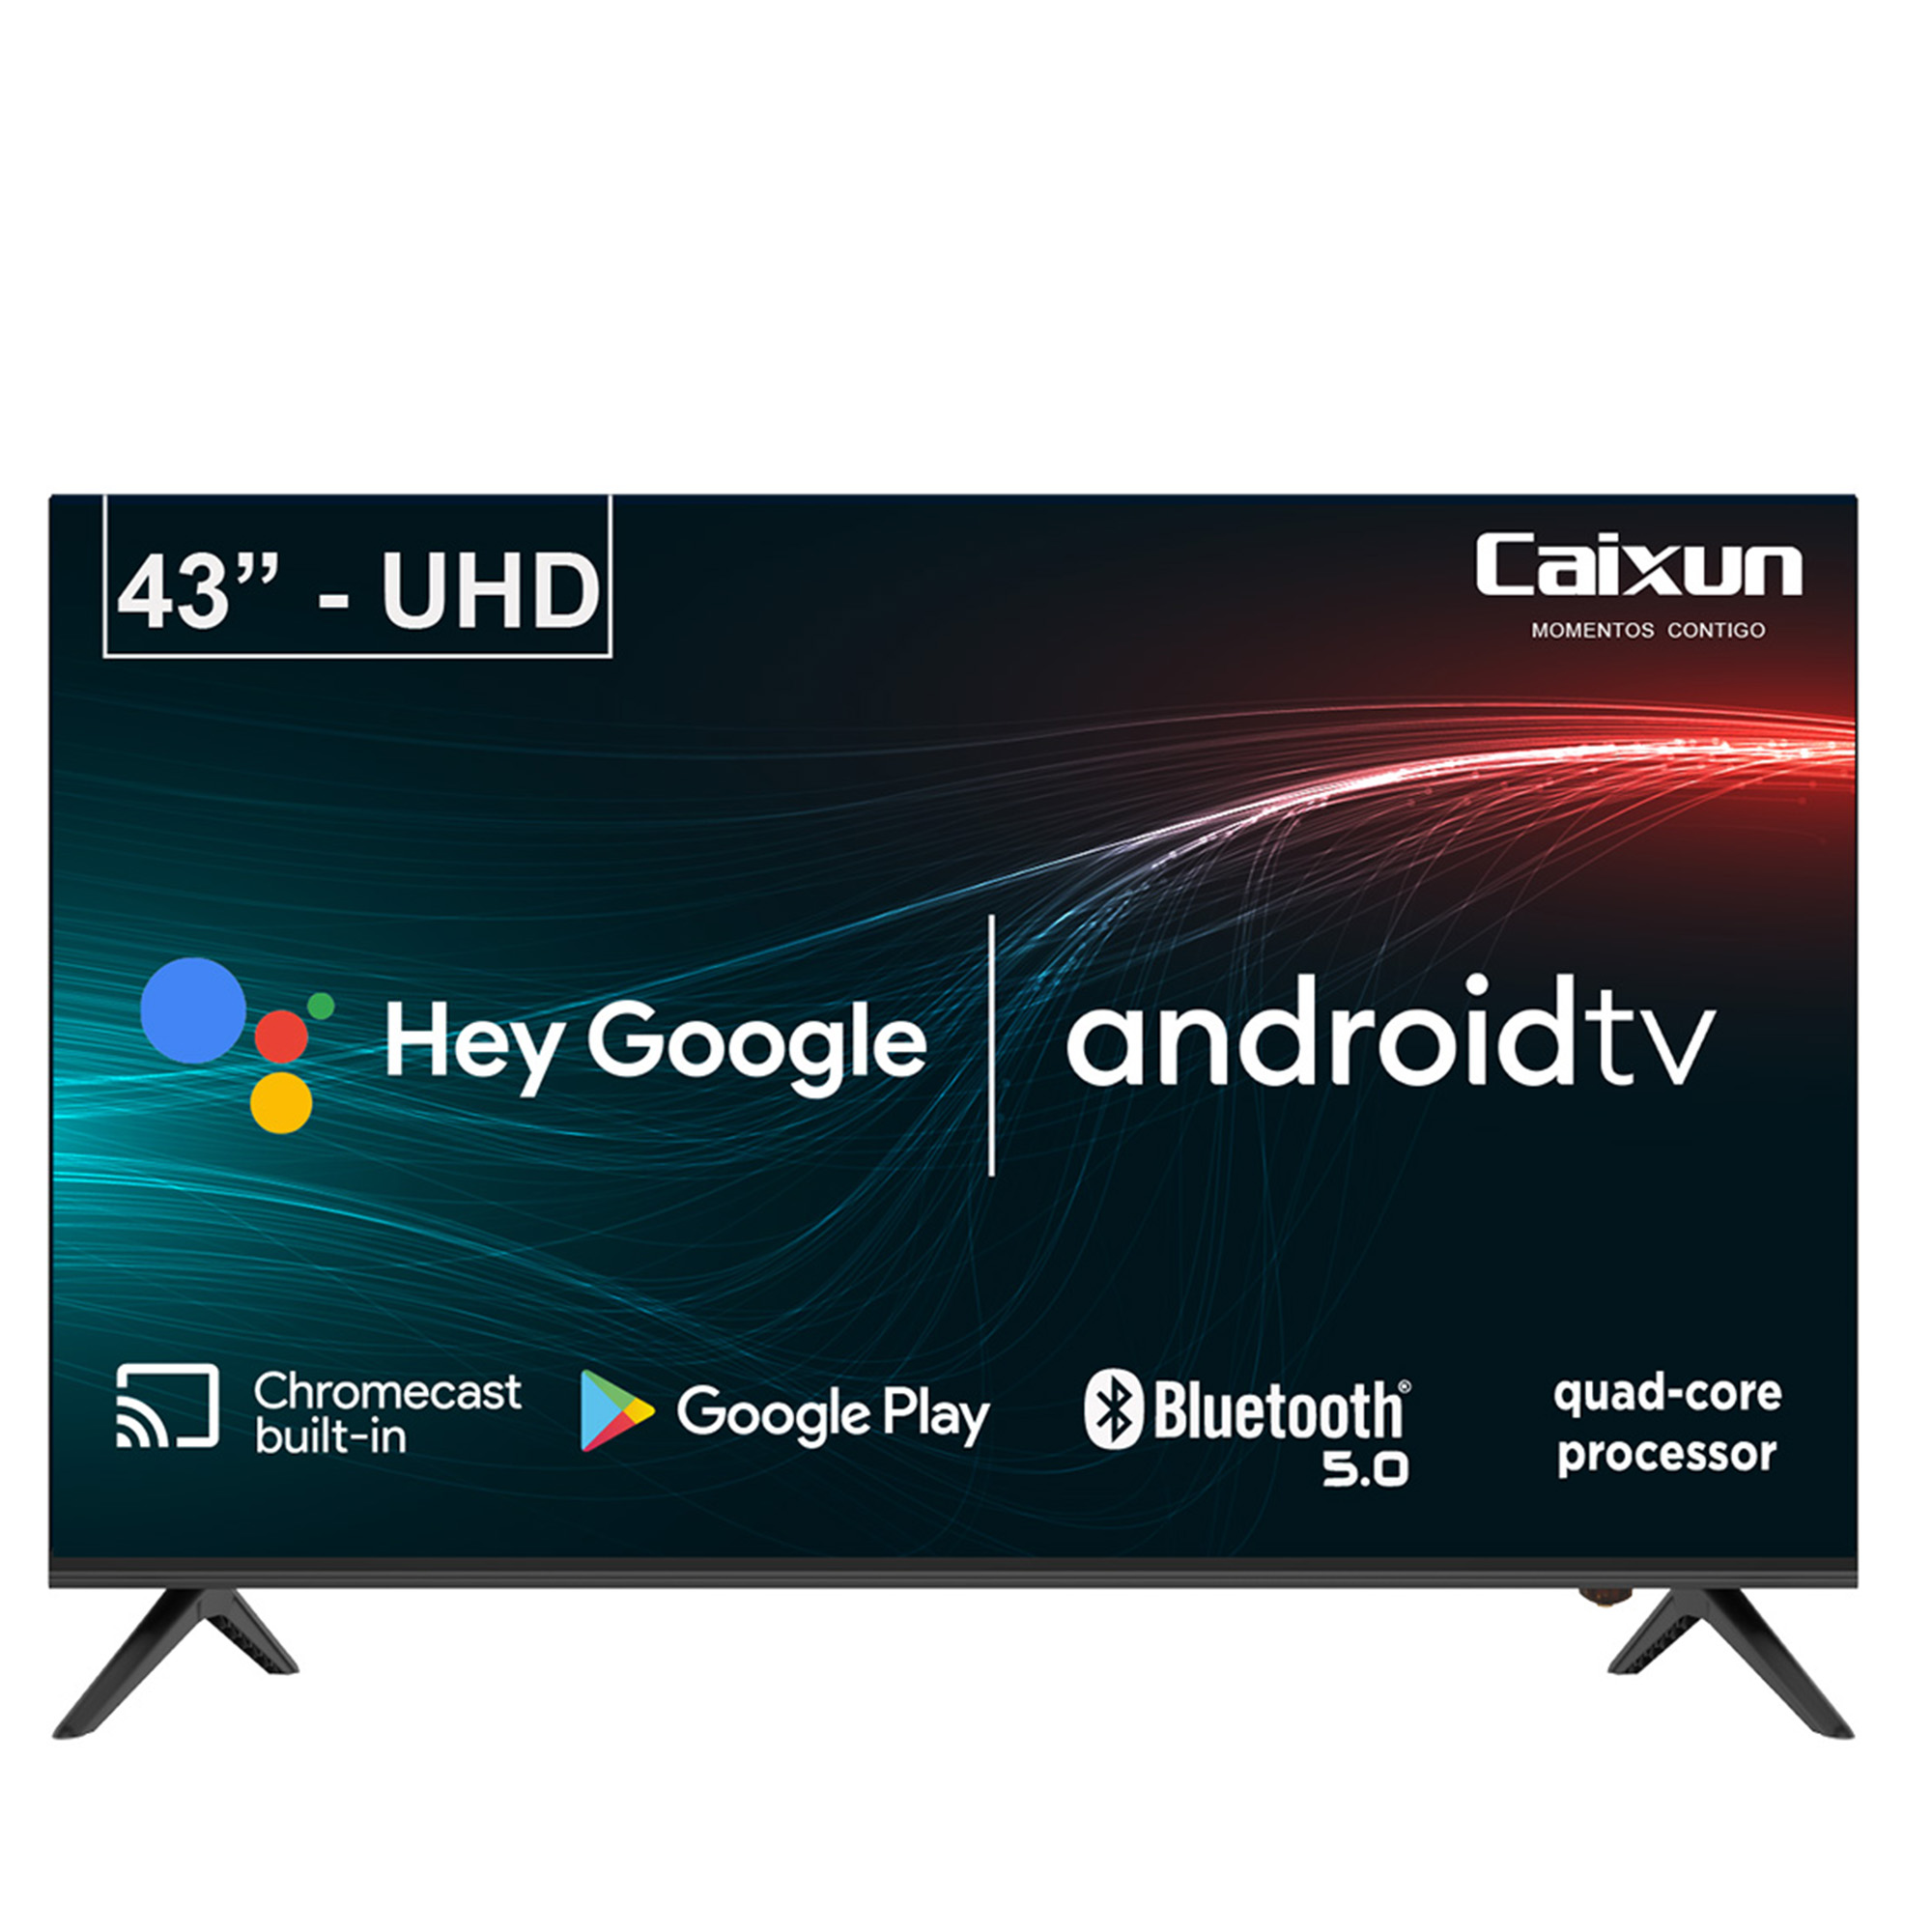 Caixun TV 32 Pulgadas, Televisor LED HD con 3 HDMI y 2 USB,Triple